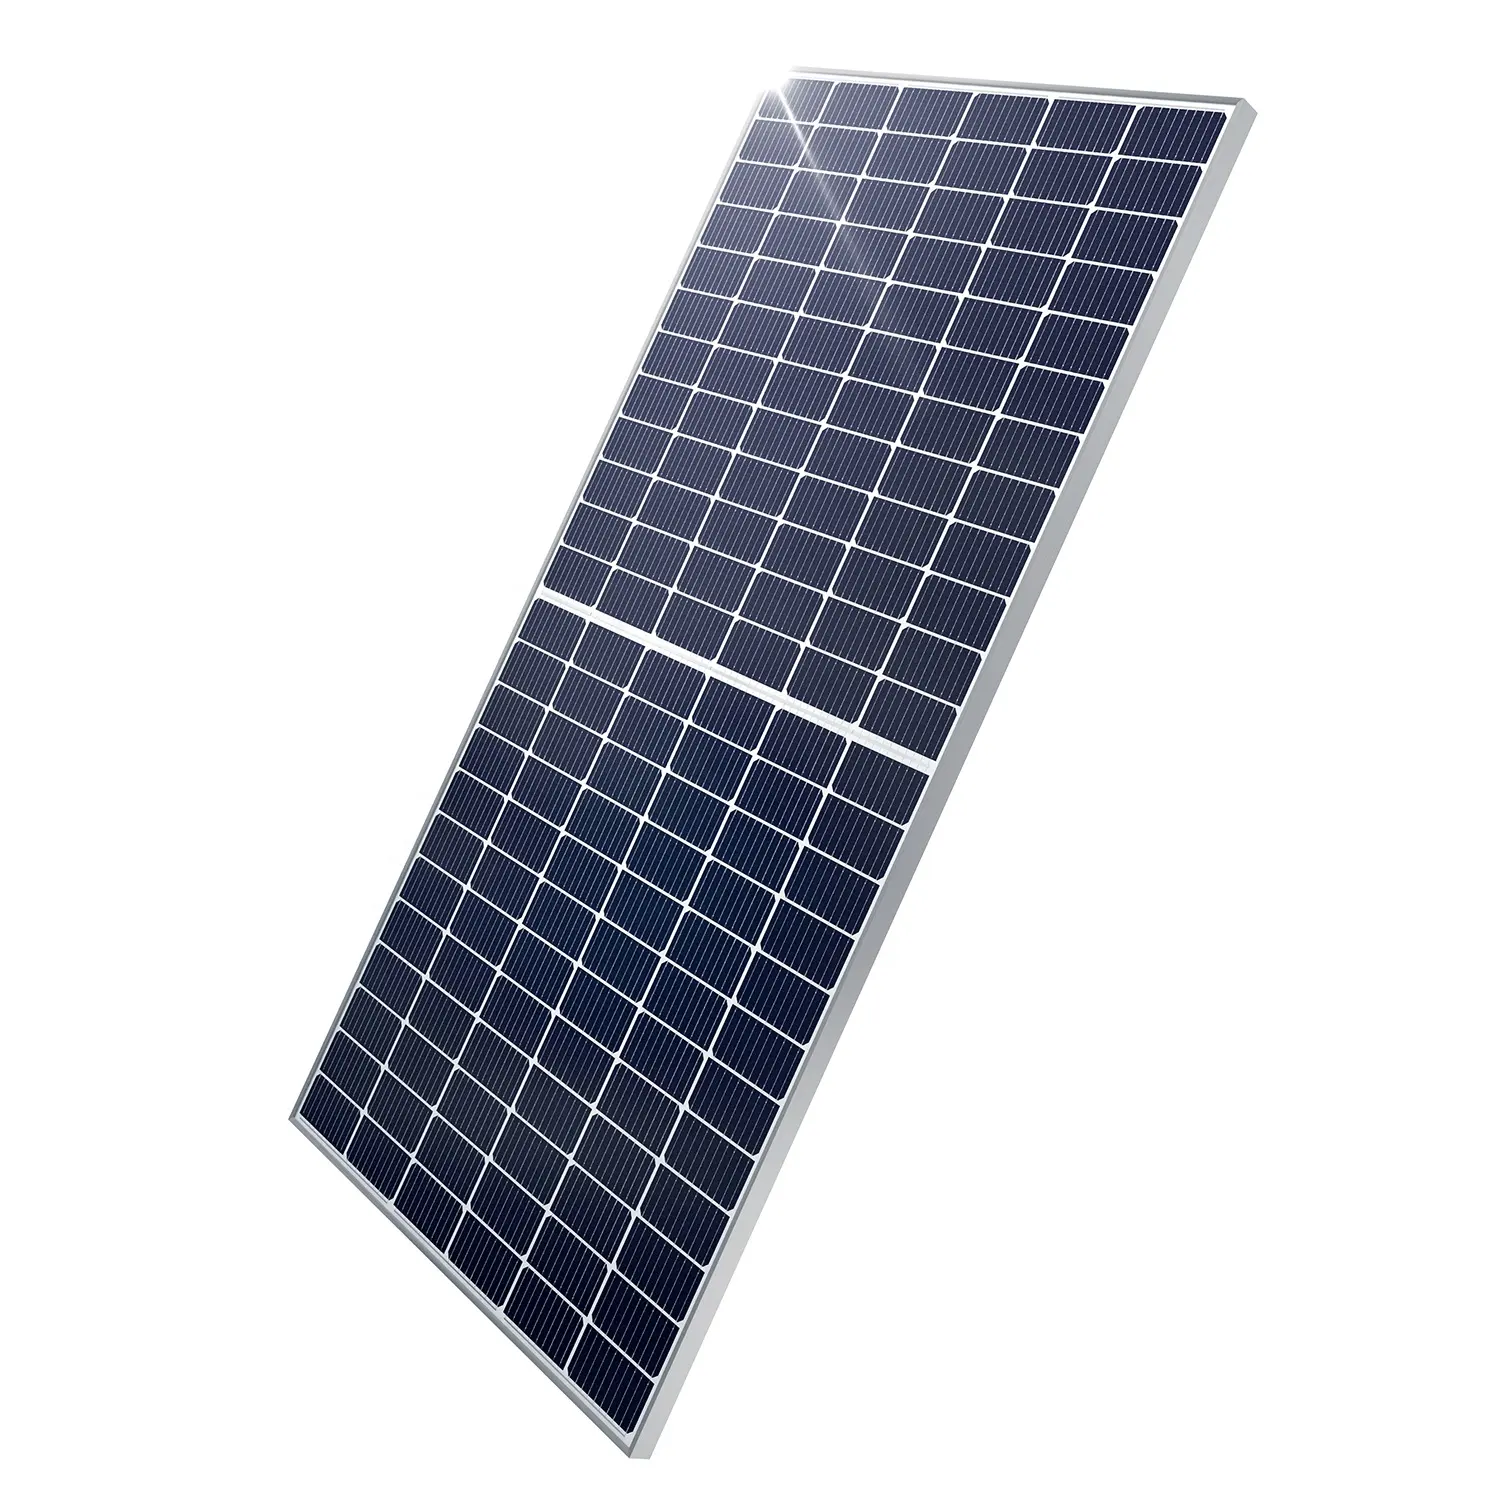 Photovoltaik zweiseitige doppelglas-Solarpanels 530 W 535 W 540 W 545 W 550 W 555 W monokristalline PV-Module